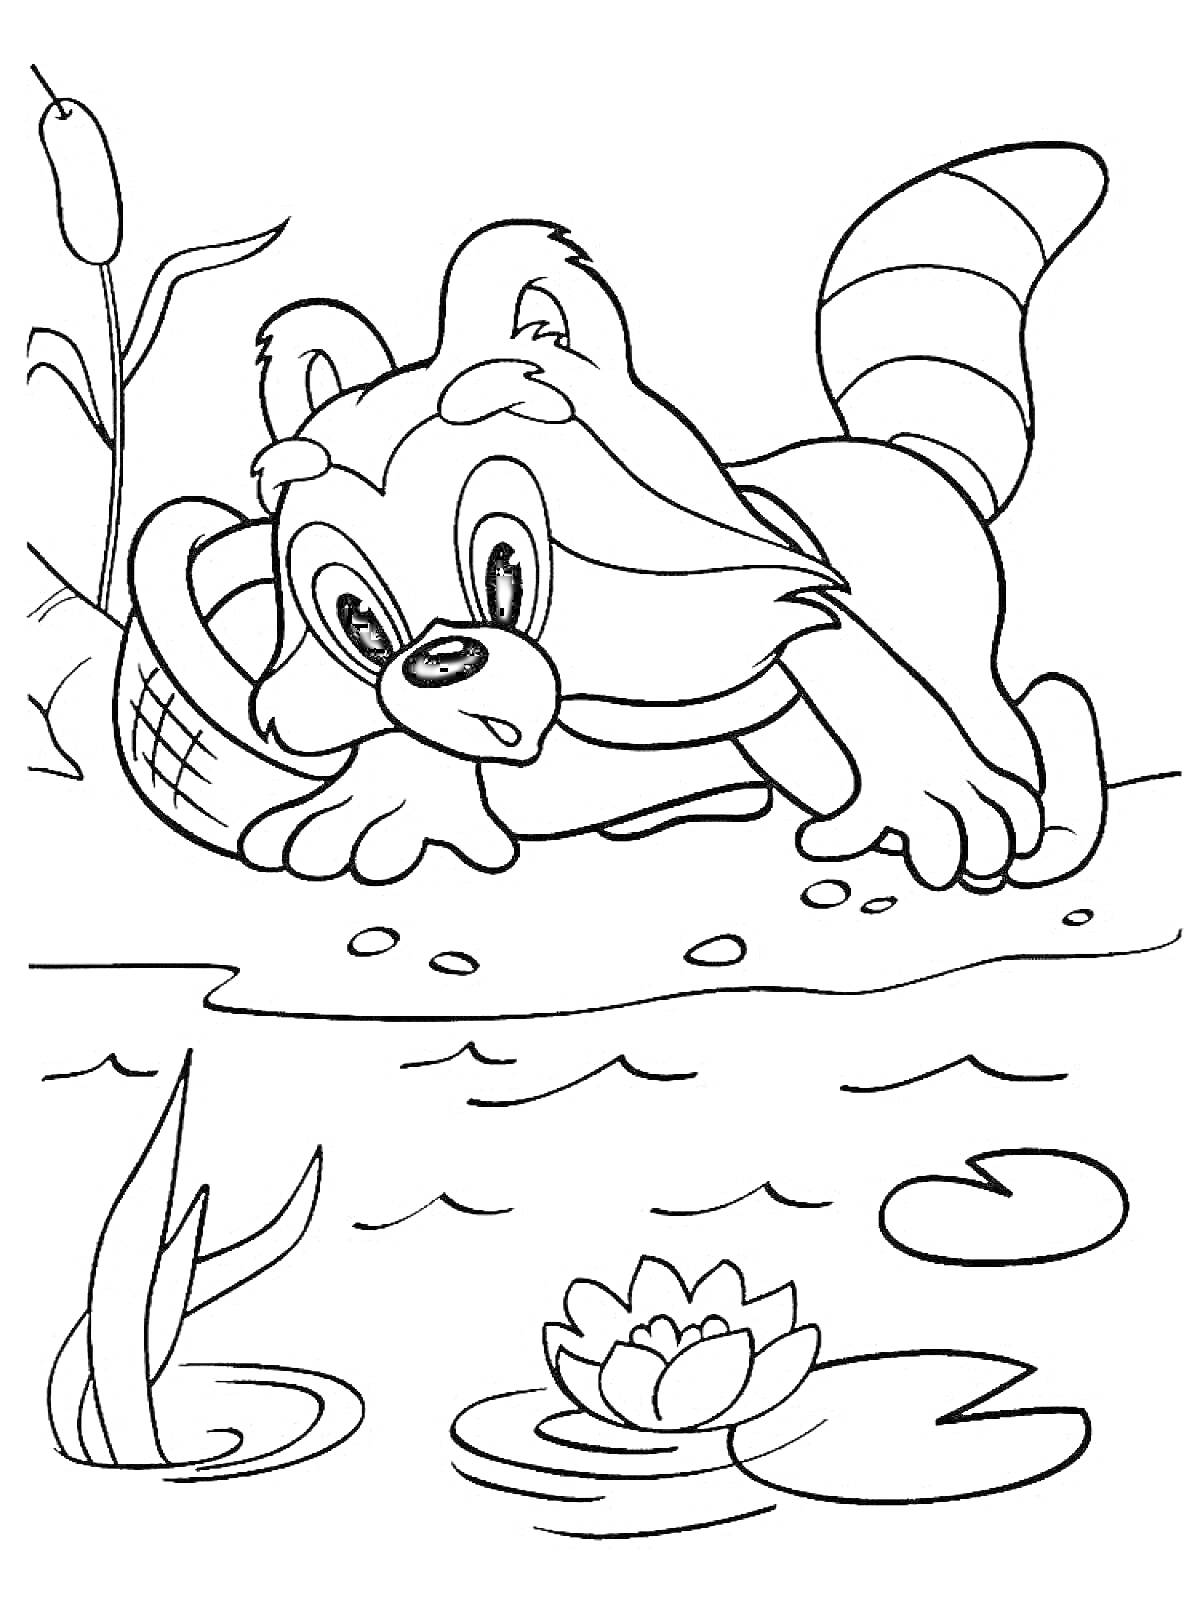 Раскраска Крошка енот у пруда с камышами и кувшинками